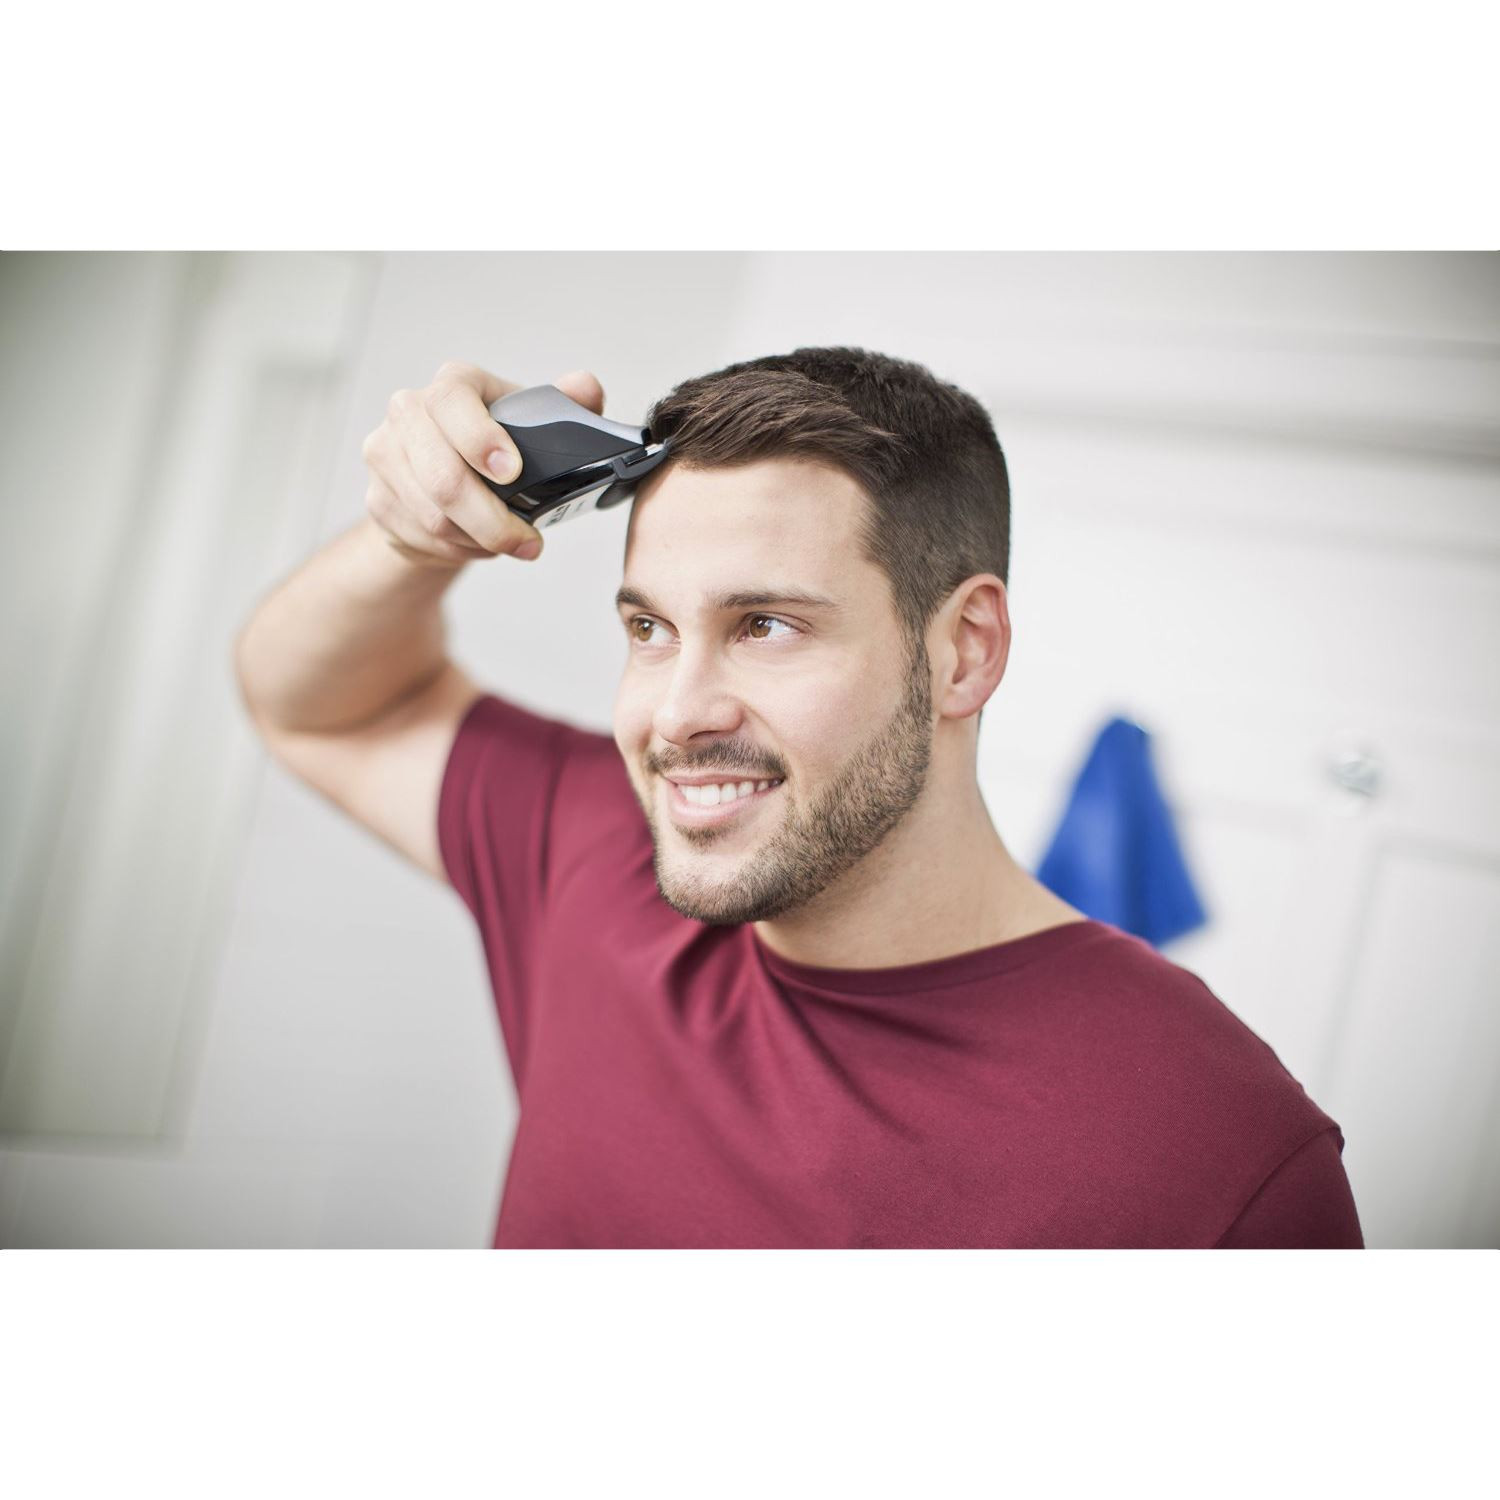 DIY Haircut Clippers
 Remington Men Quick Cut Home DIY Hair Clipper Rechargeable